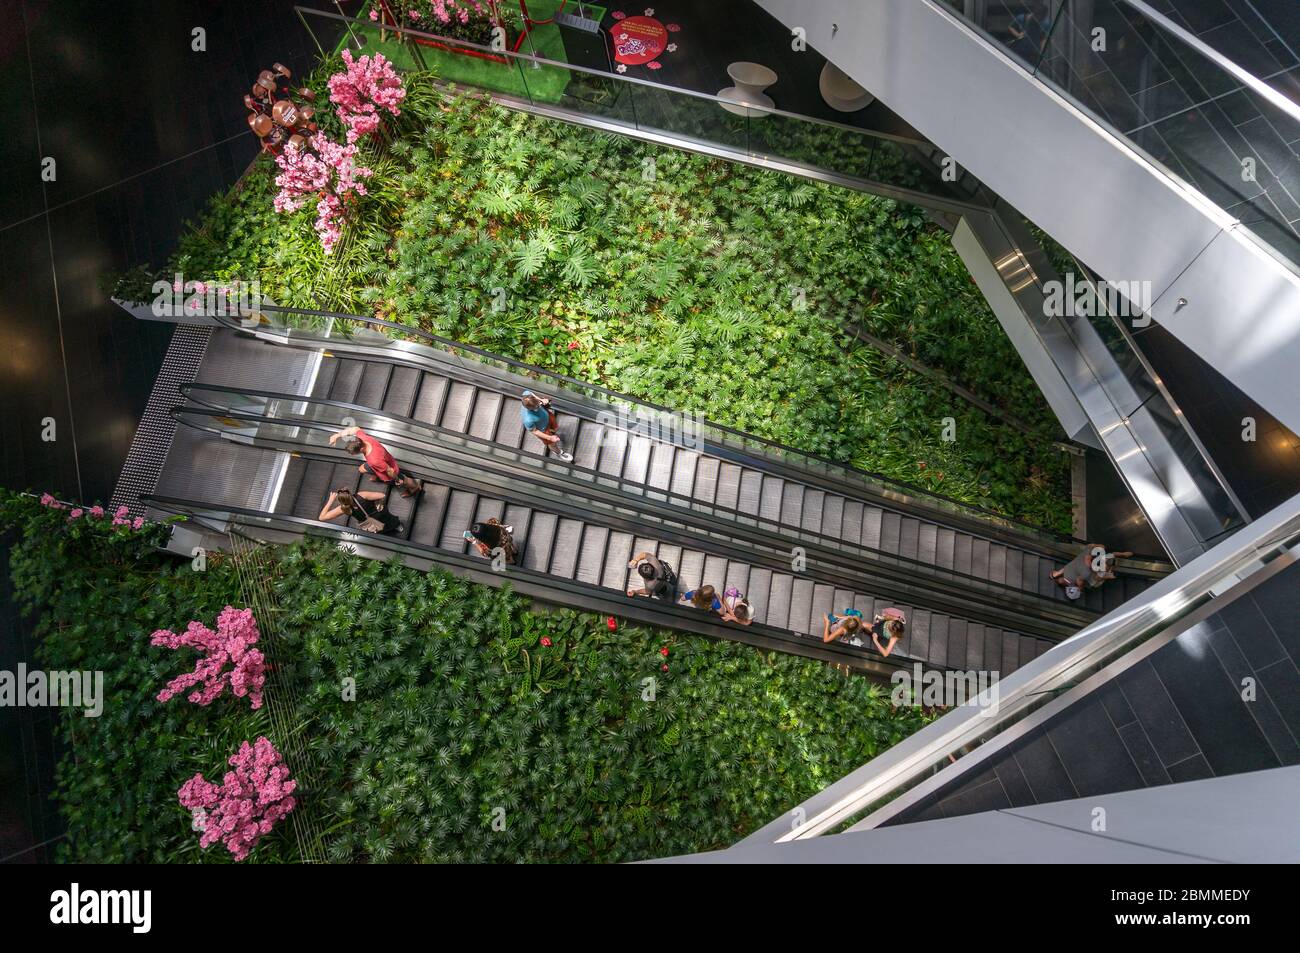 Sydney, Australia - January 26, 2020: People on escalator inside One Central Park Sydney Shopping mall building Stock Photo